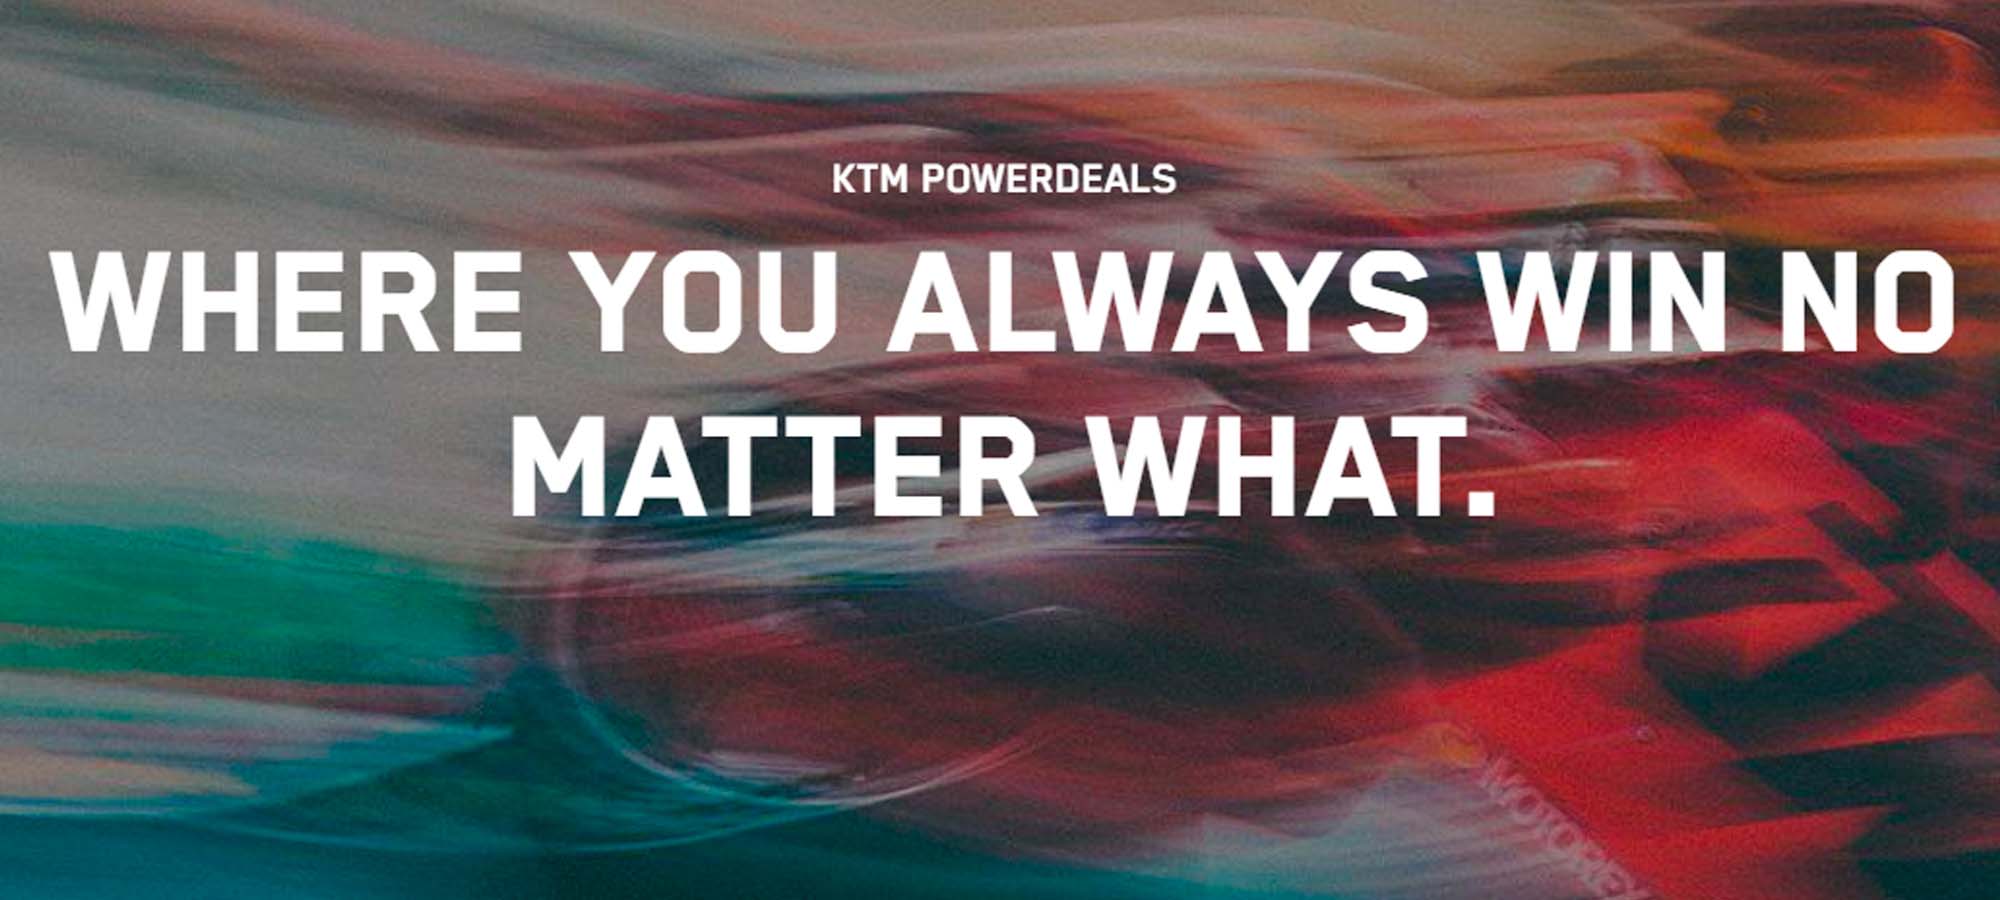 KTM US - KTM POWERDEALS RETAIL SALES PROMOTIONS b at Columbia Powersports Supercenter